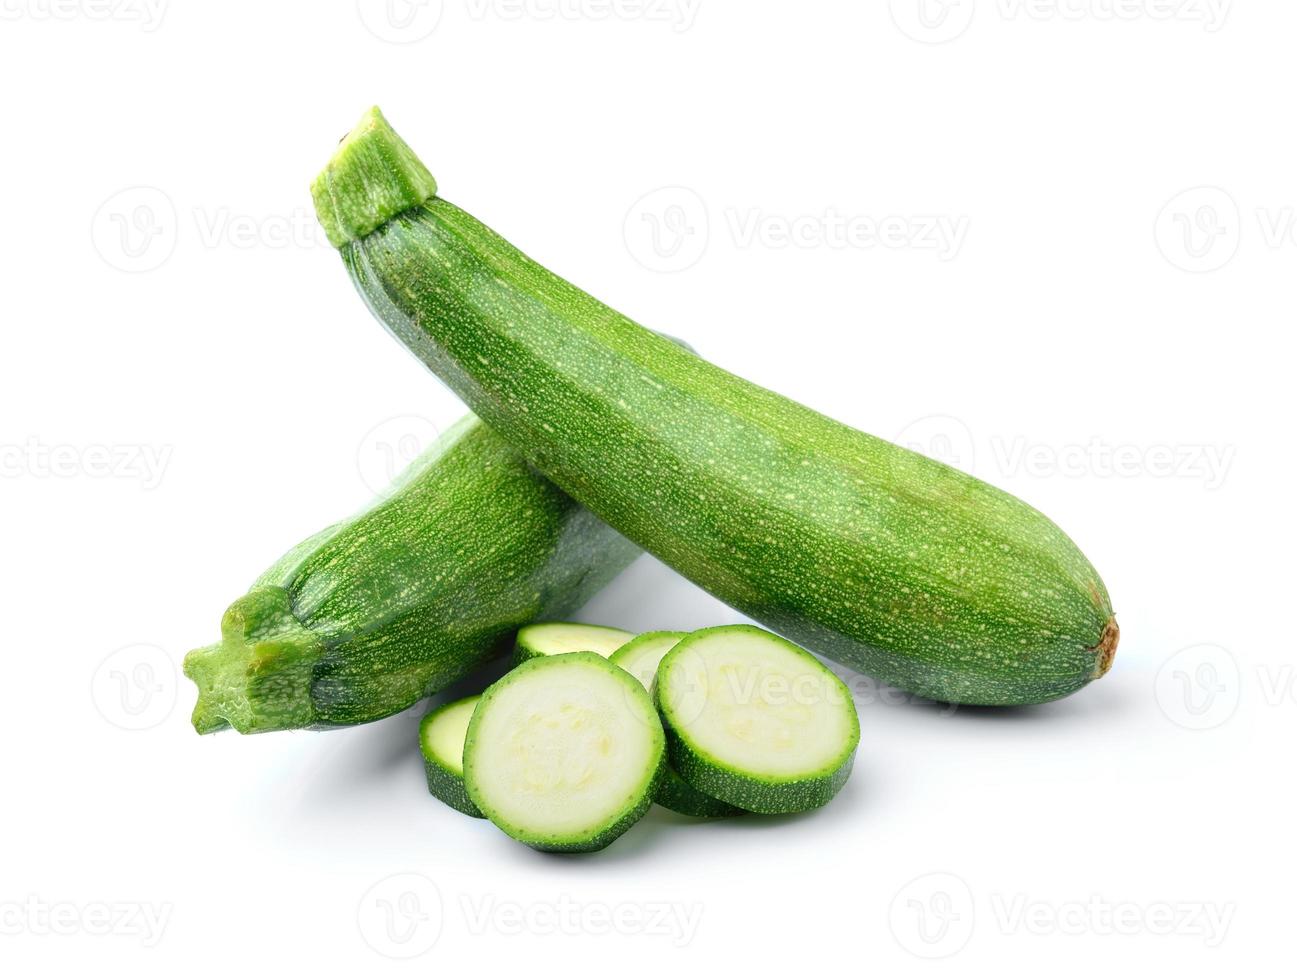 Verse groente courgette geïsoleerd op witte achtergrond foto